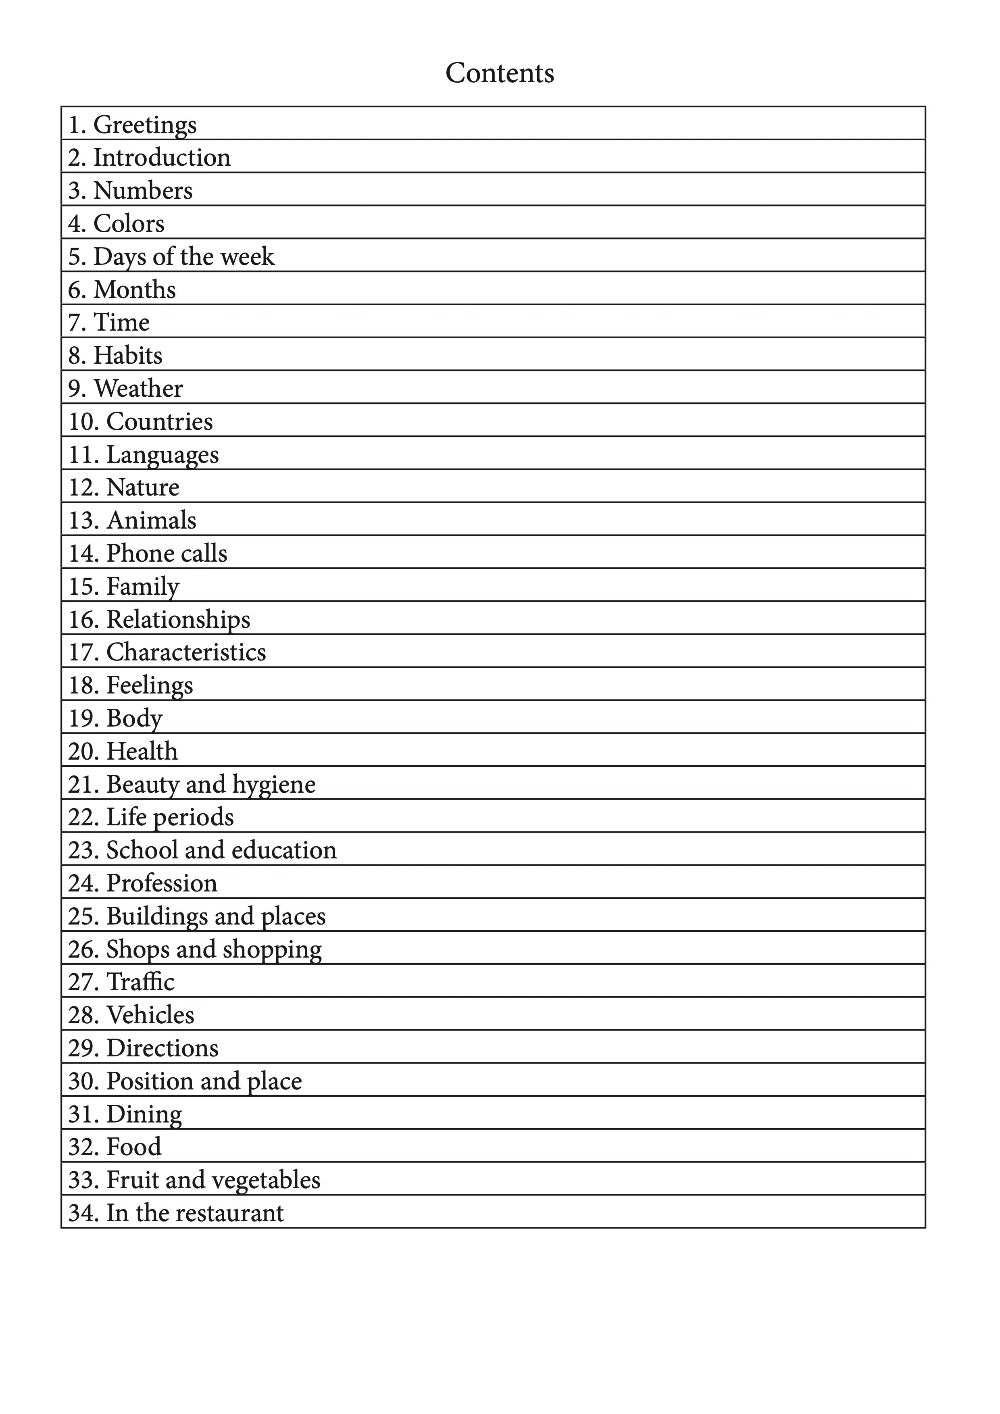 Kumaoni language learning notebook contents page 1